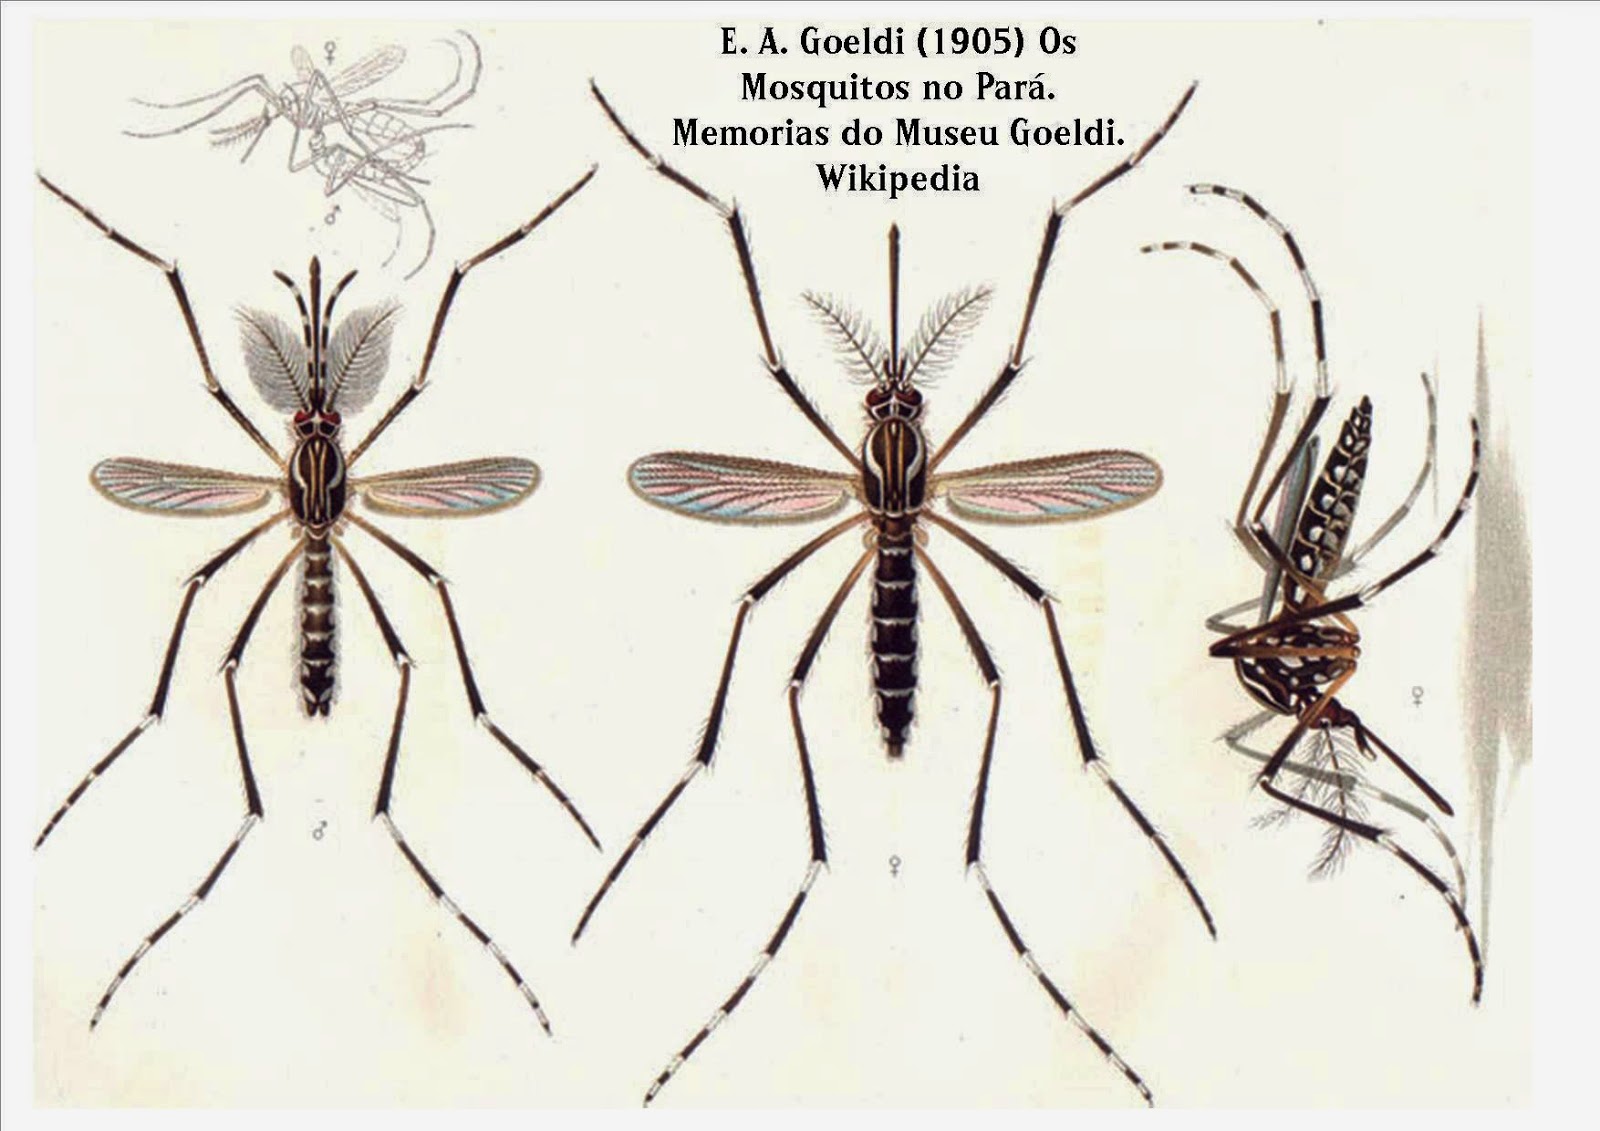 Roots 'n' Shoots: Flies: Biological Control - Garden Critter of the Month